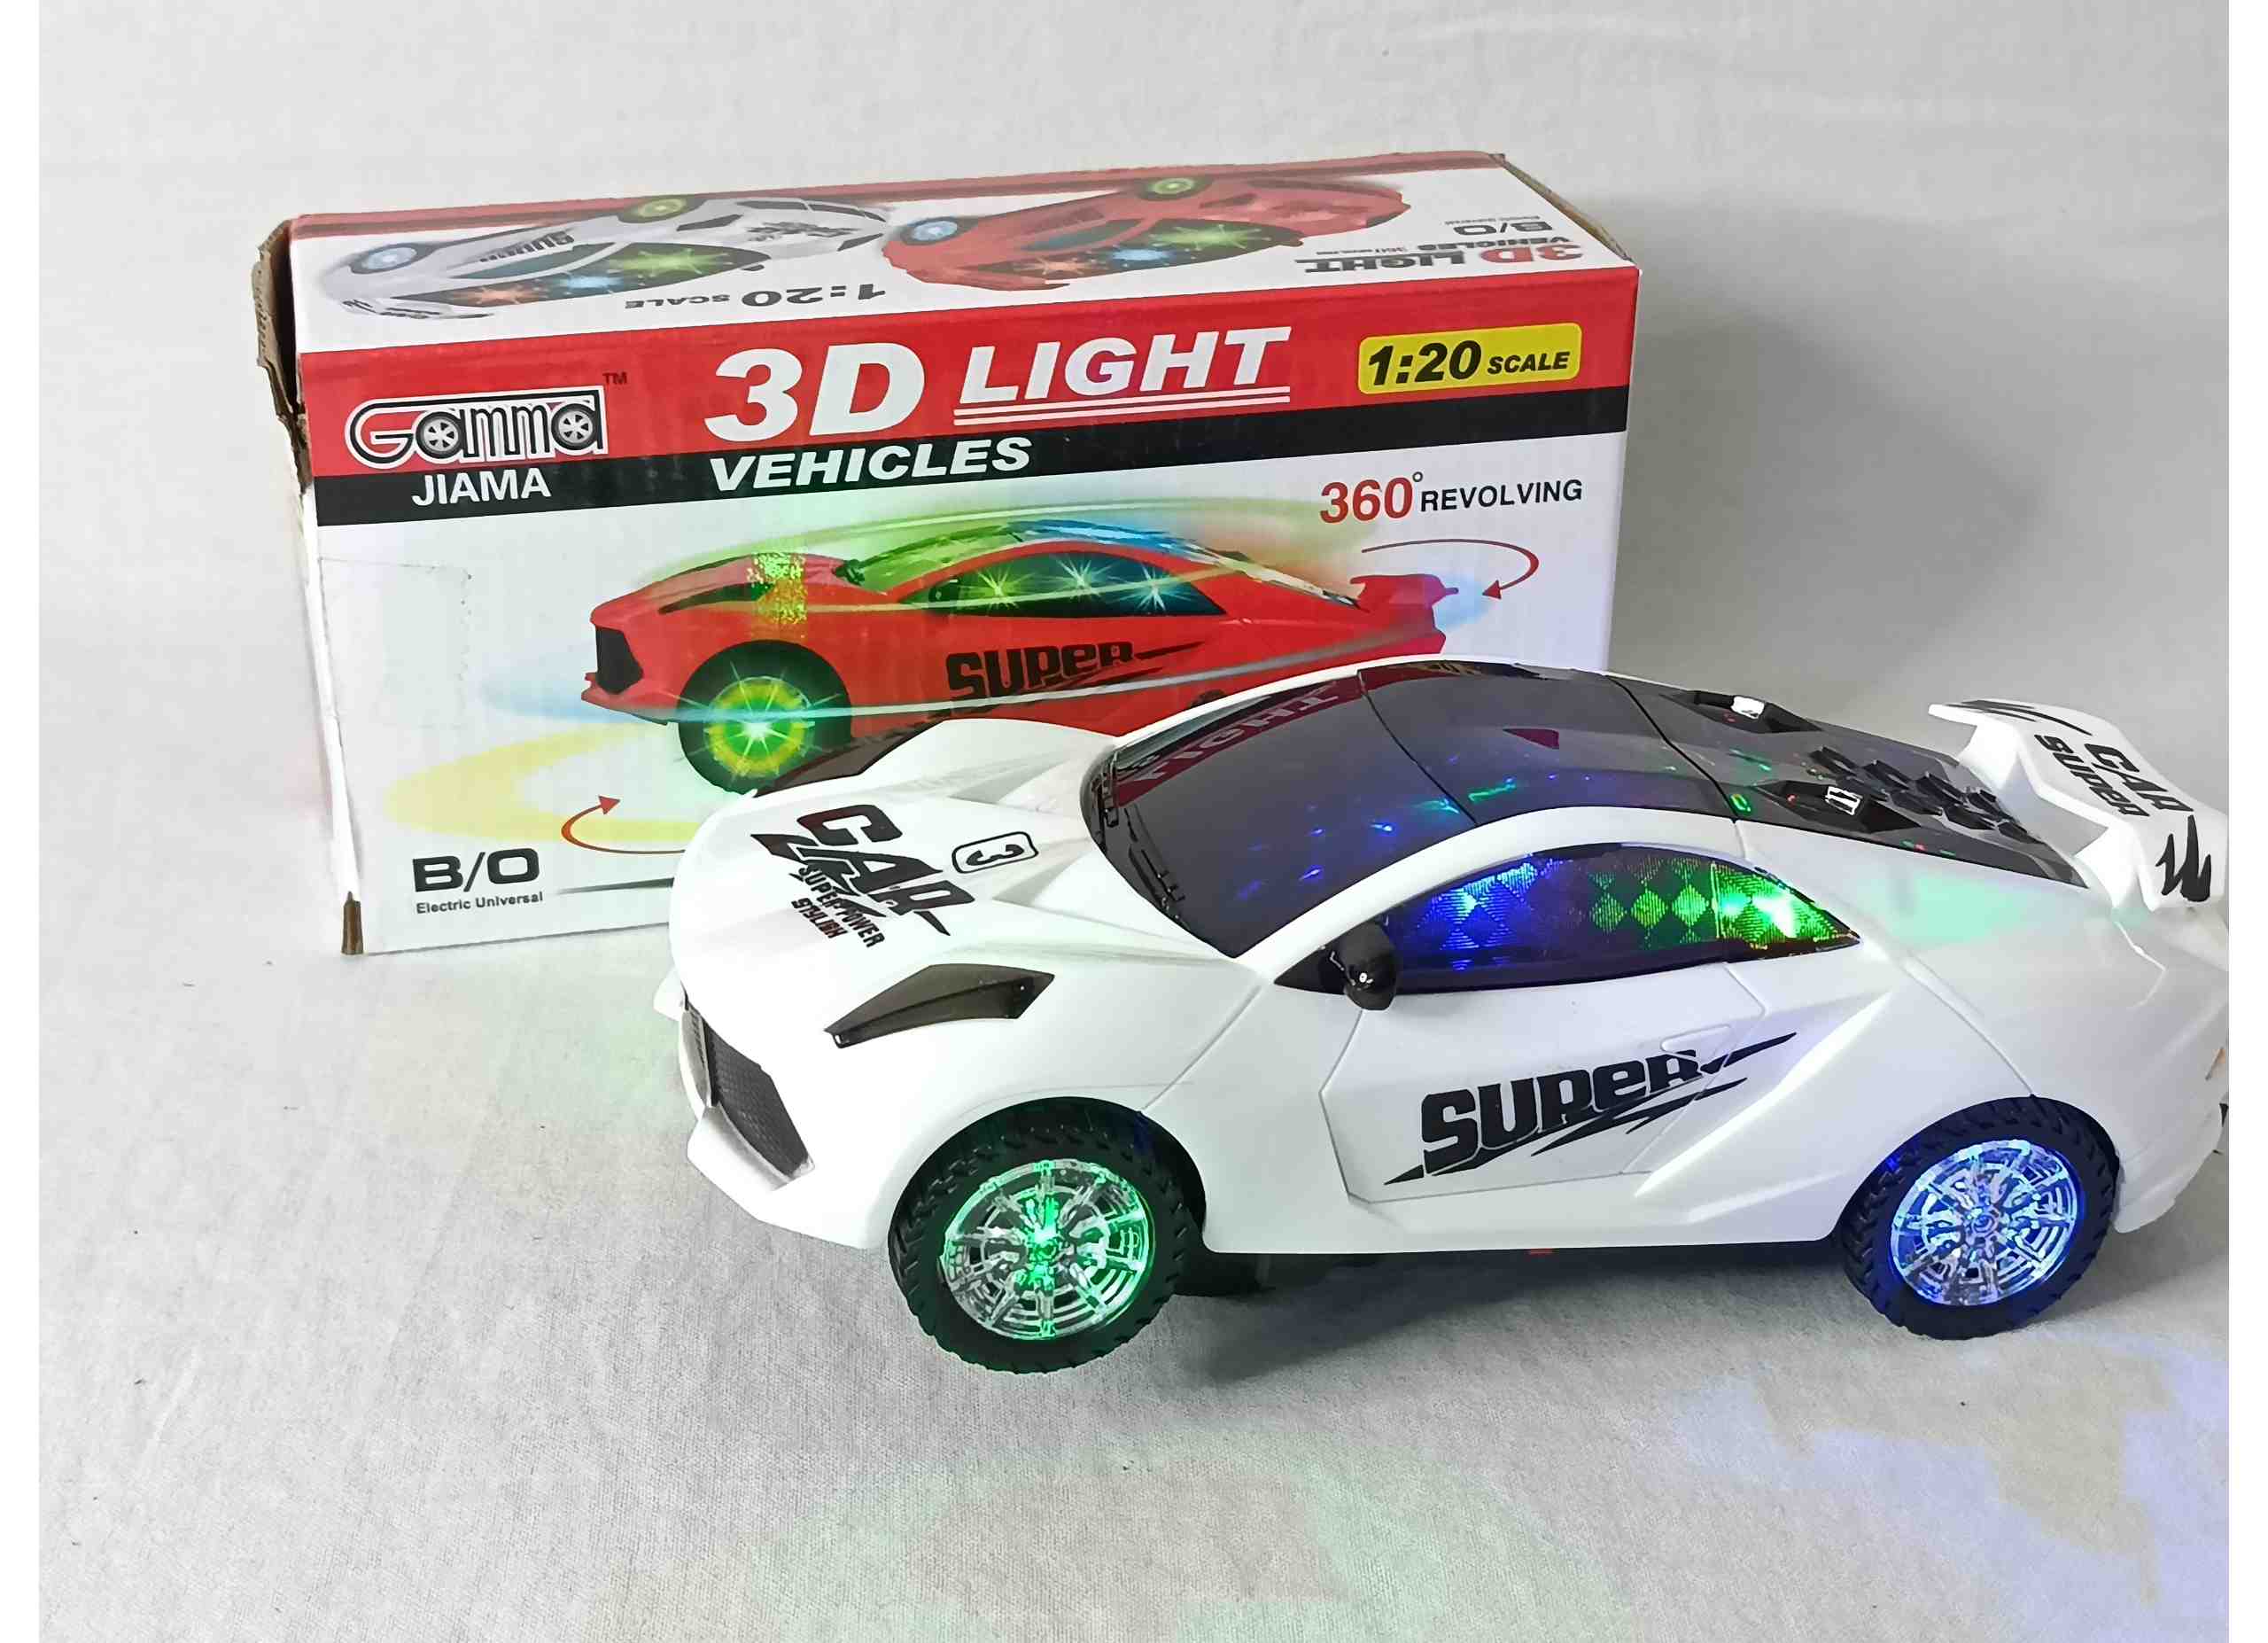 360 REVOLVING 3D LIGHT CAR